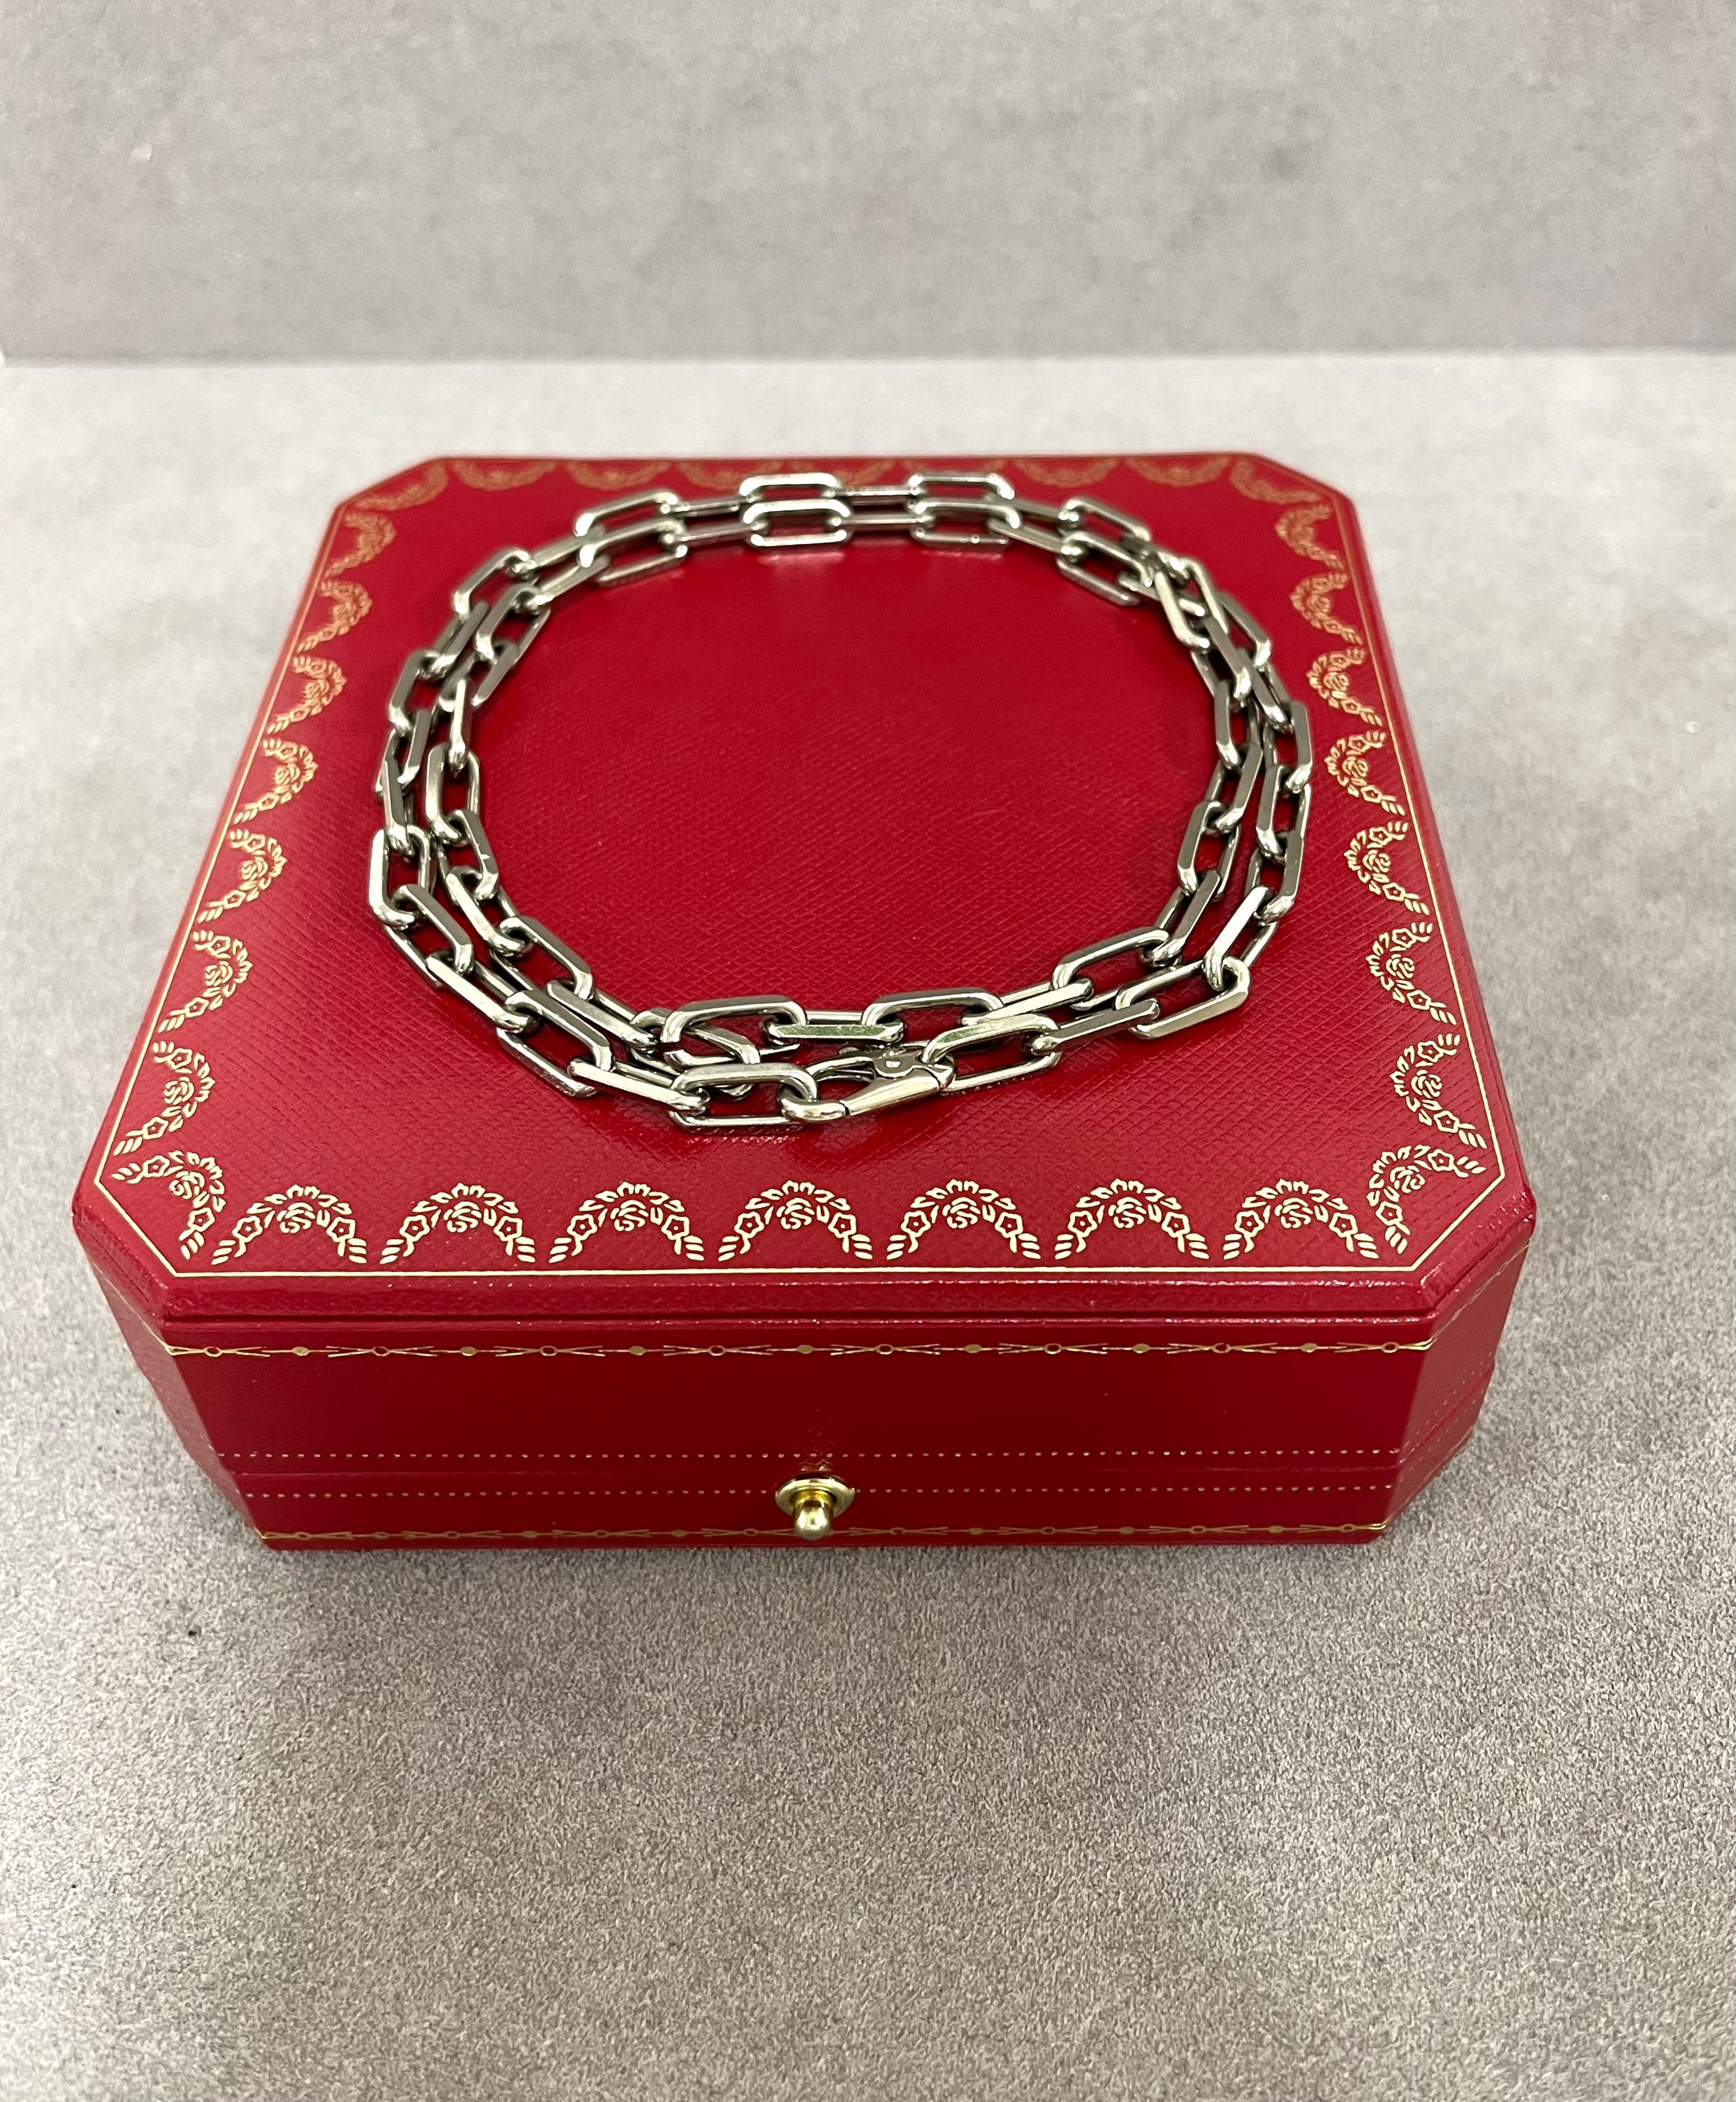 Cartier Santos Dumont 18 Karat White Gold Chain Necklace In Excellent Condition For Sale In Rome, IT